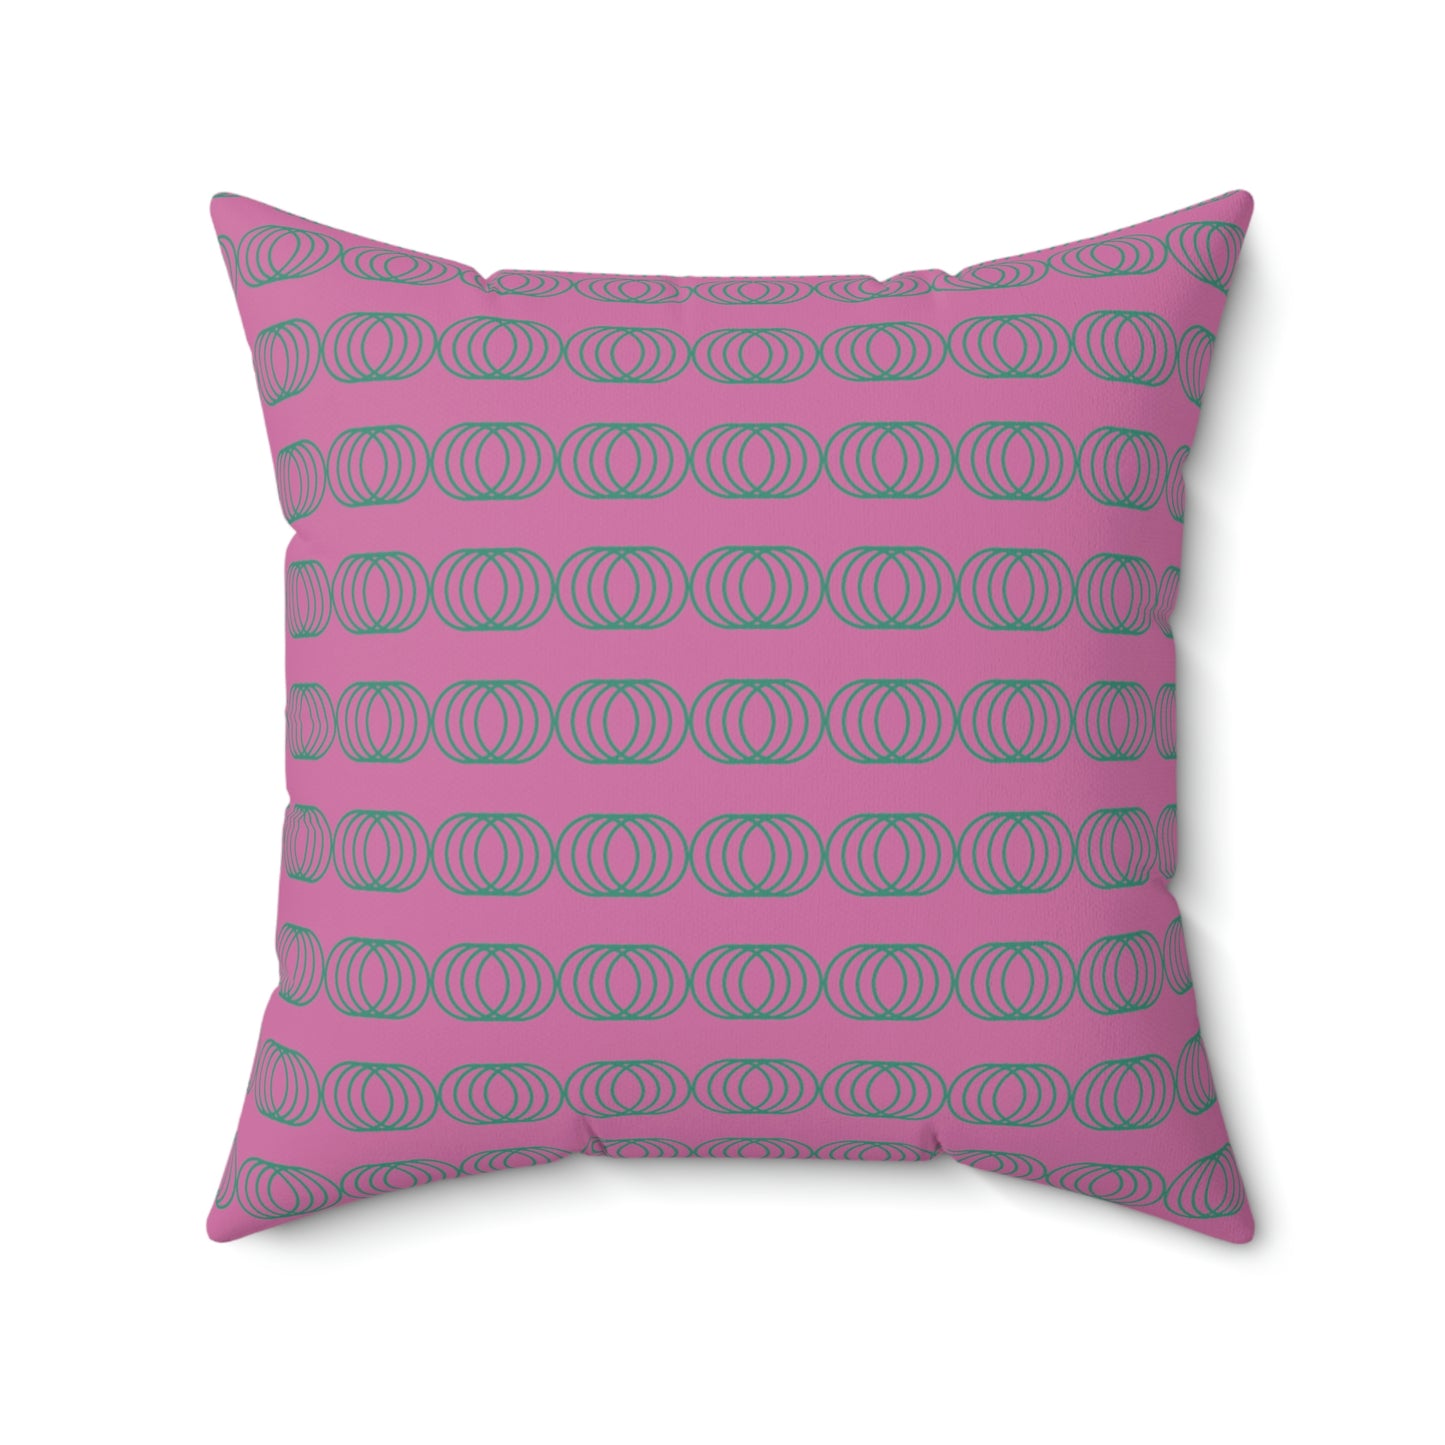 Spun Polyester Square Pillow Case "Green Circles on Light Pink”